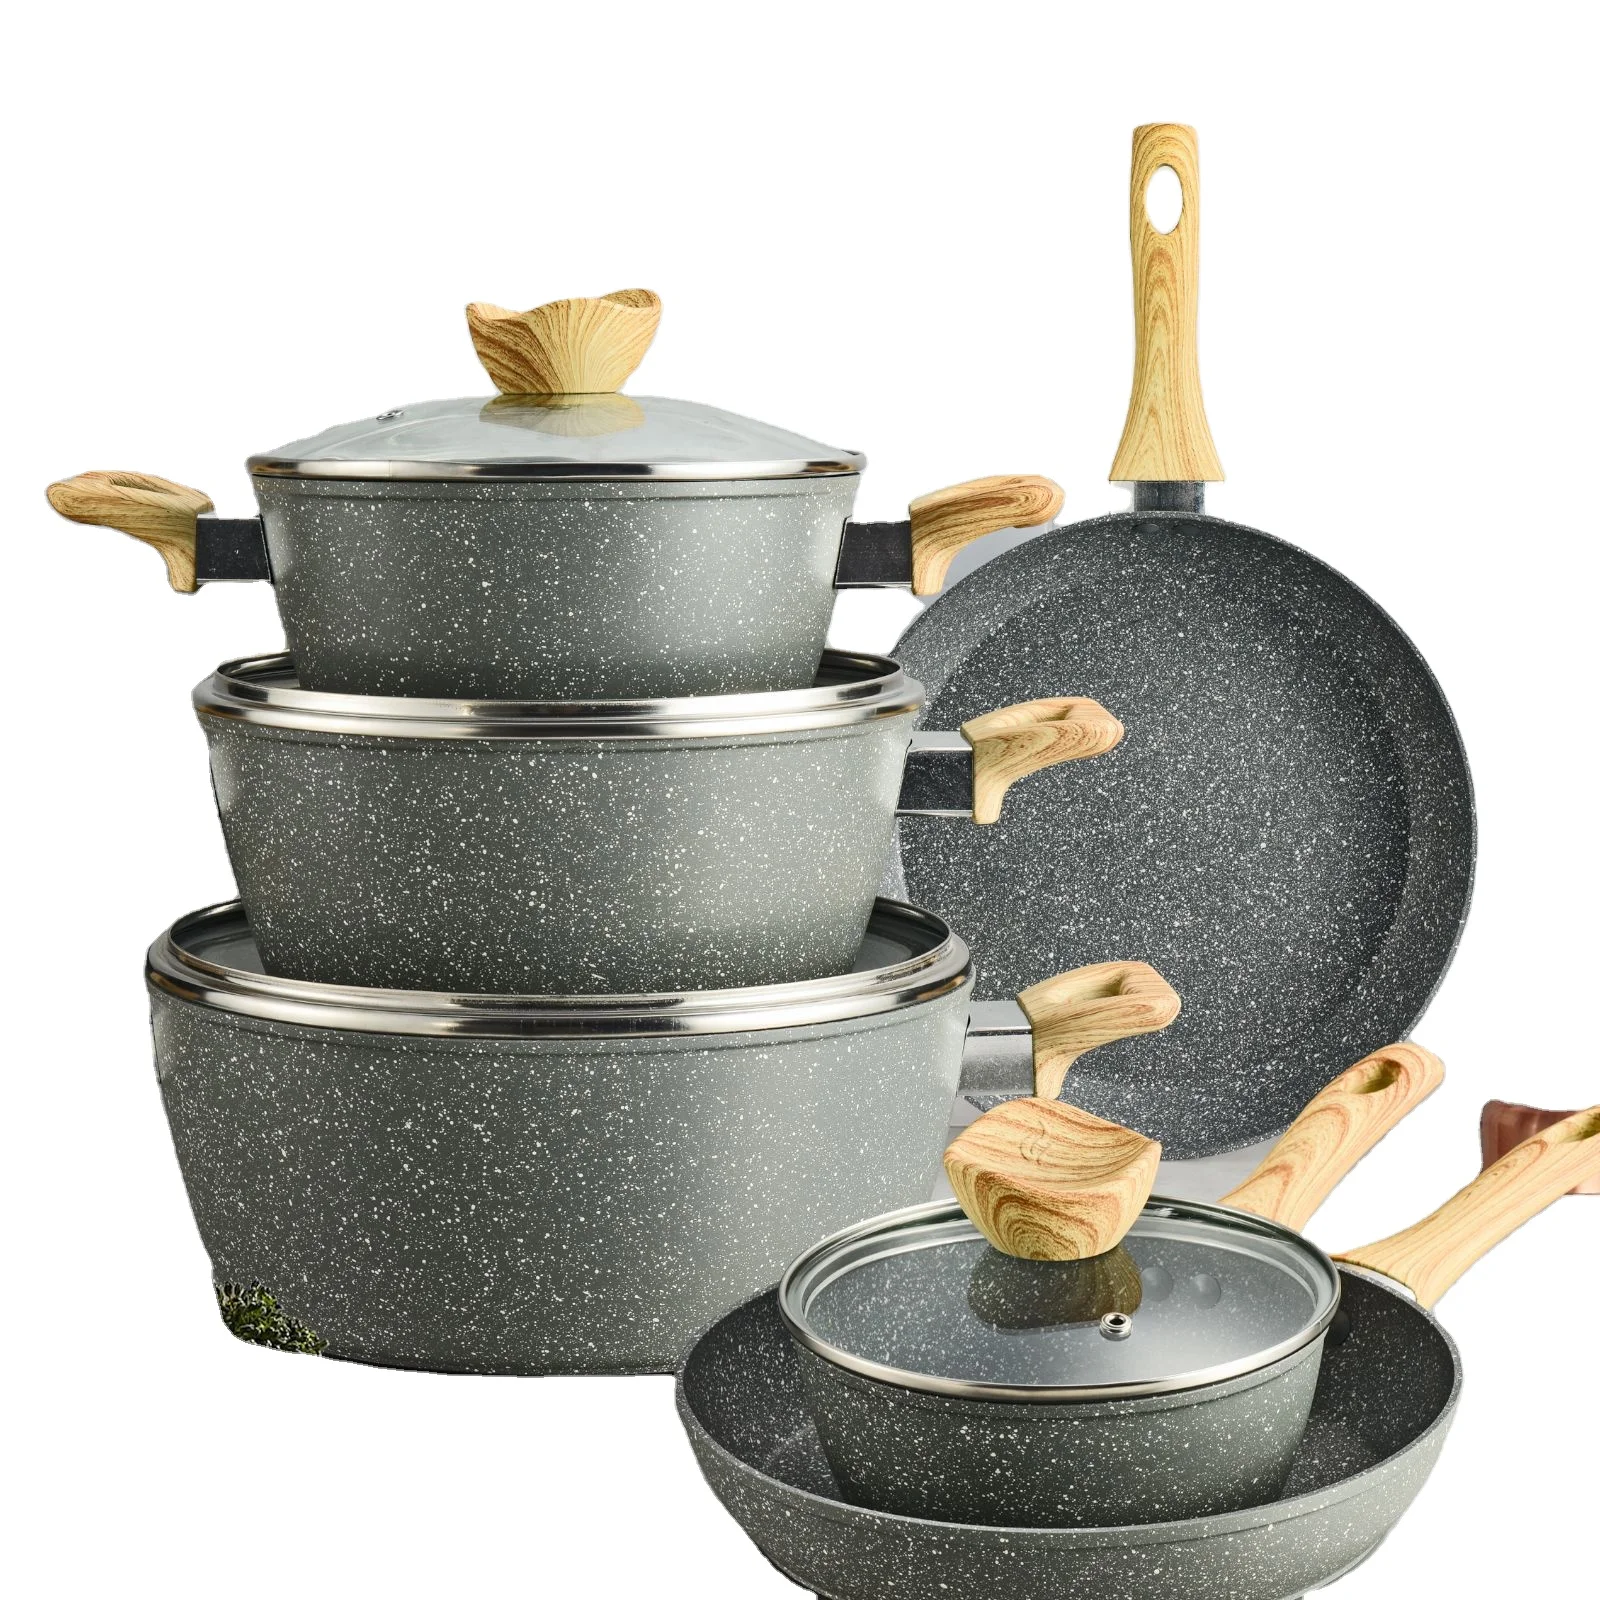 GraniteStone Nonstick Pots and Pans Cookware Set - 10 Piece